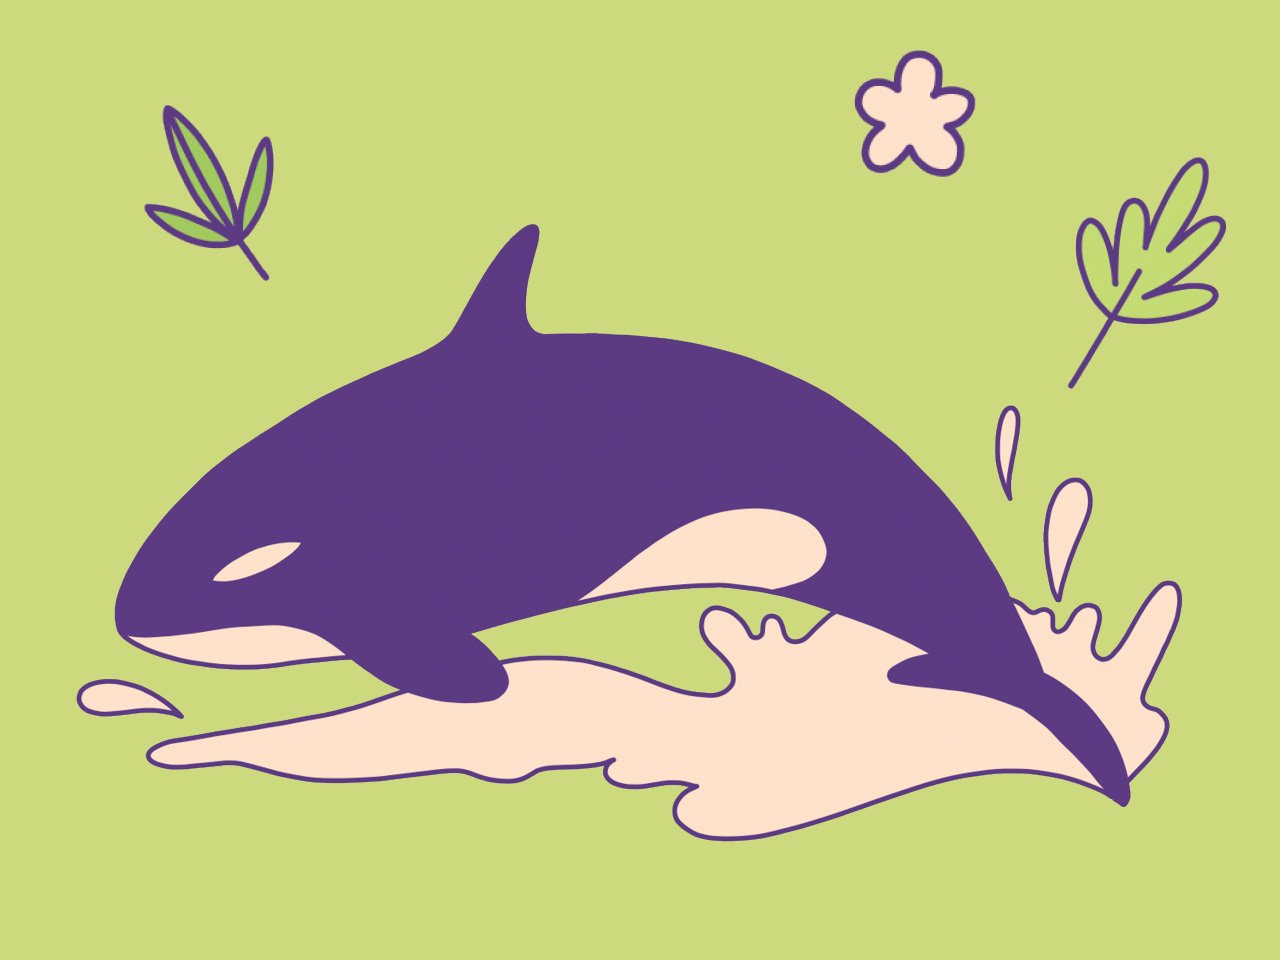 An illustration of an orca